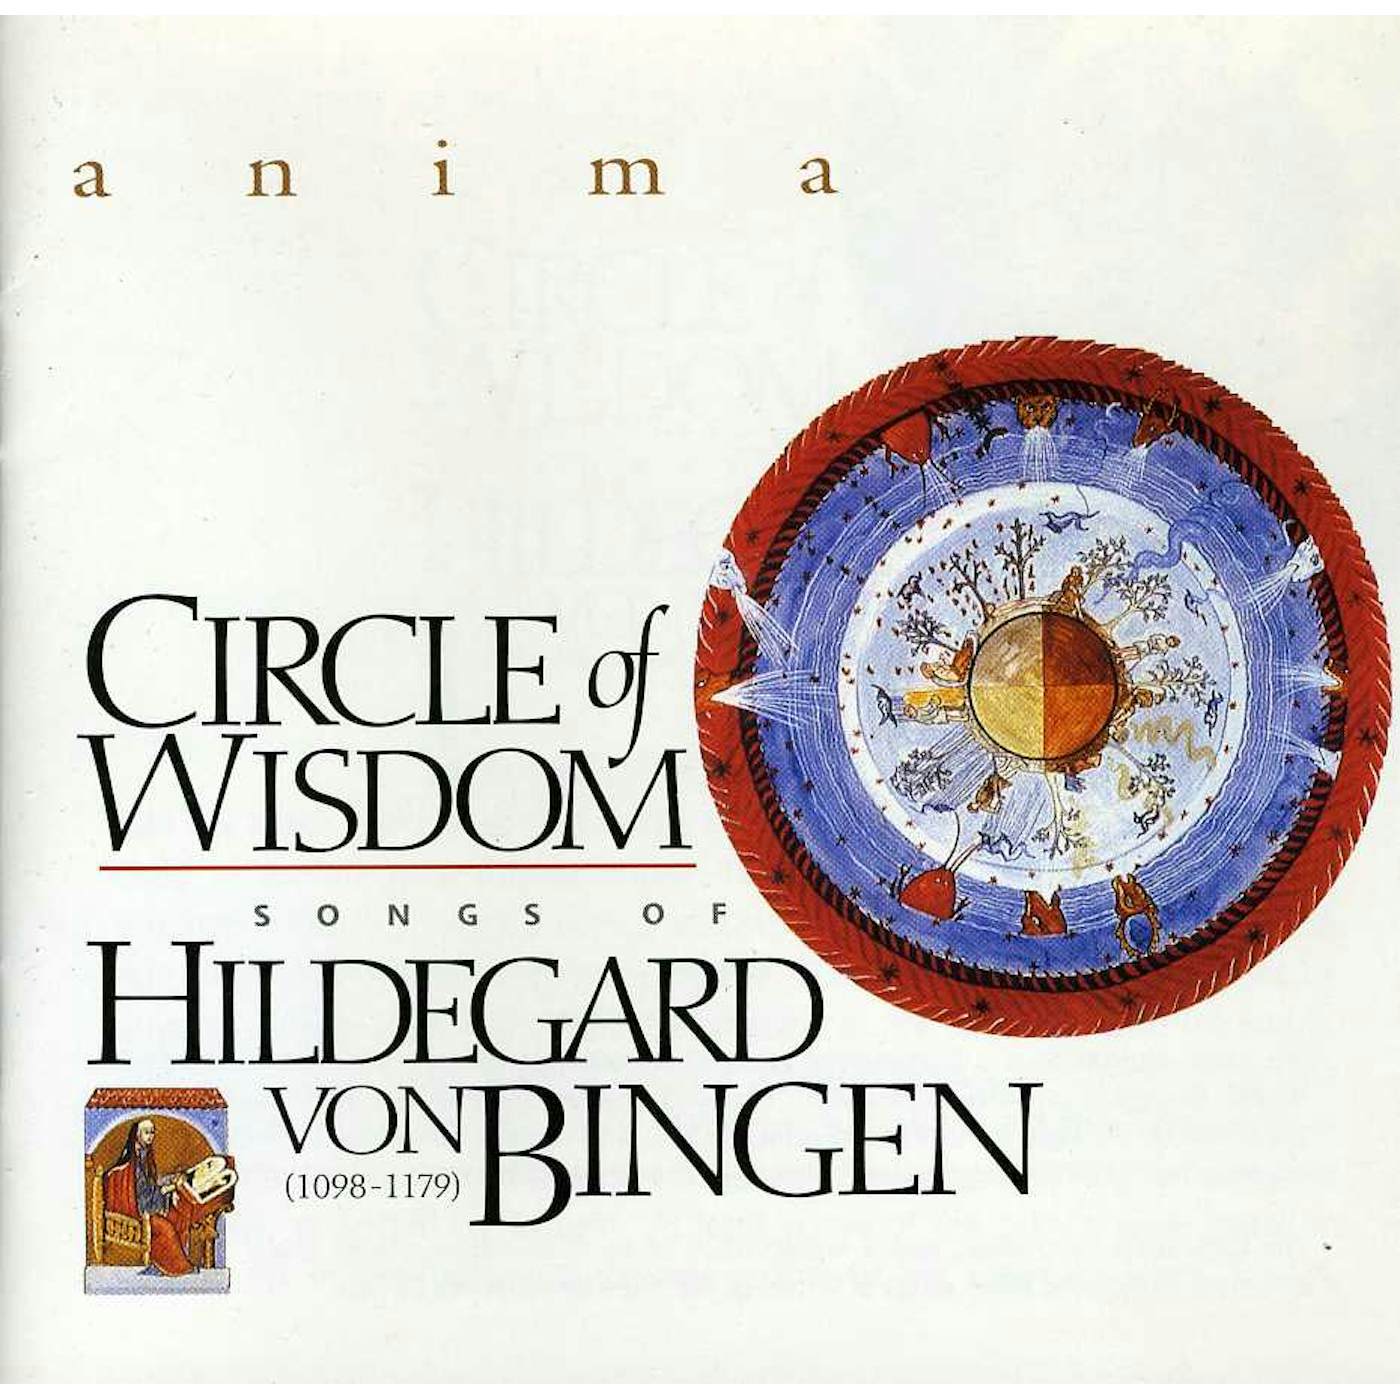 Anima CIRCLE OF WISDOM CD